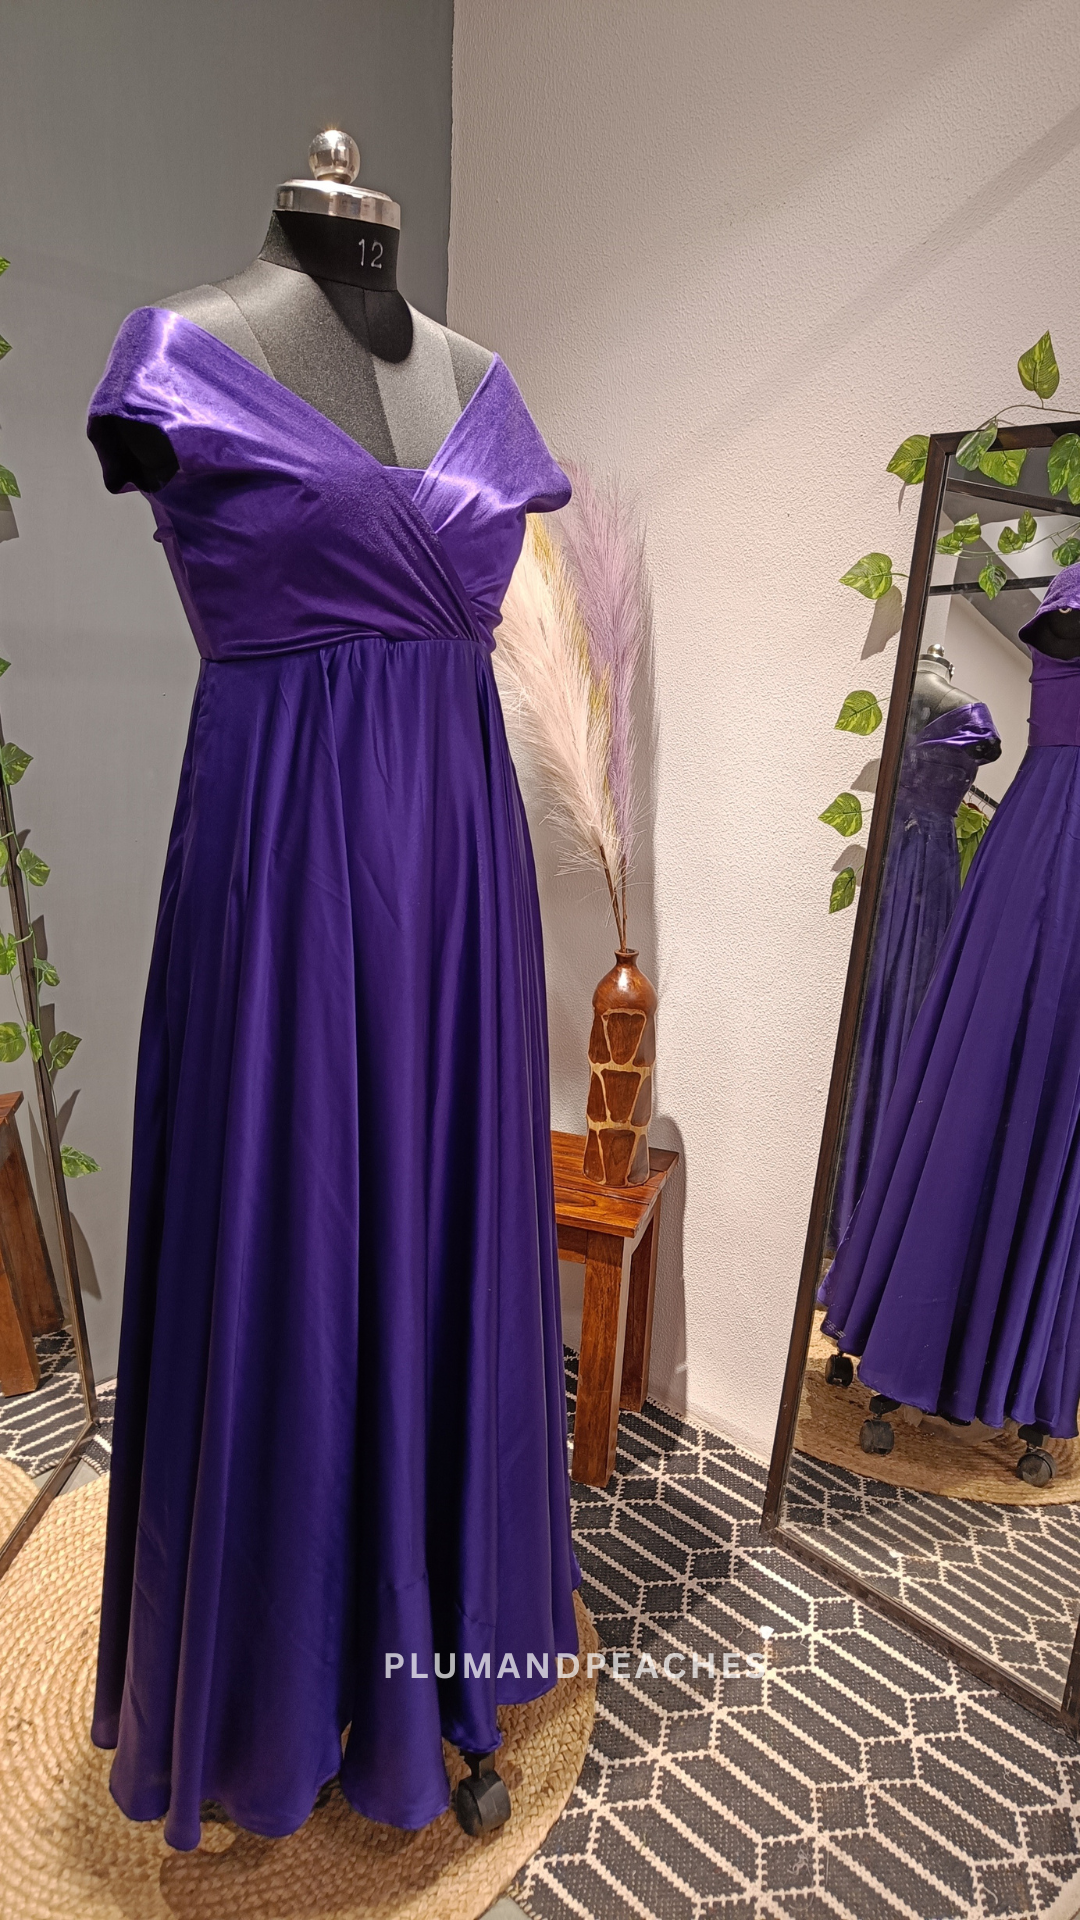 Off-Shoulder Maternity Dress in purple color